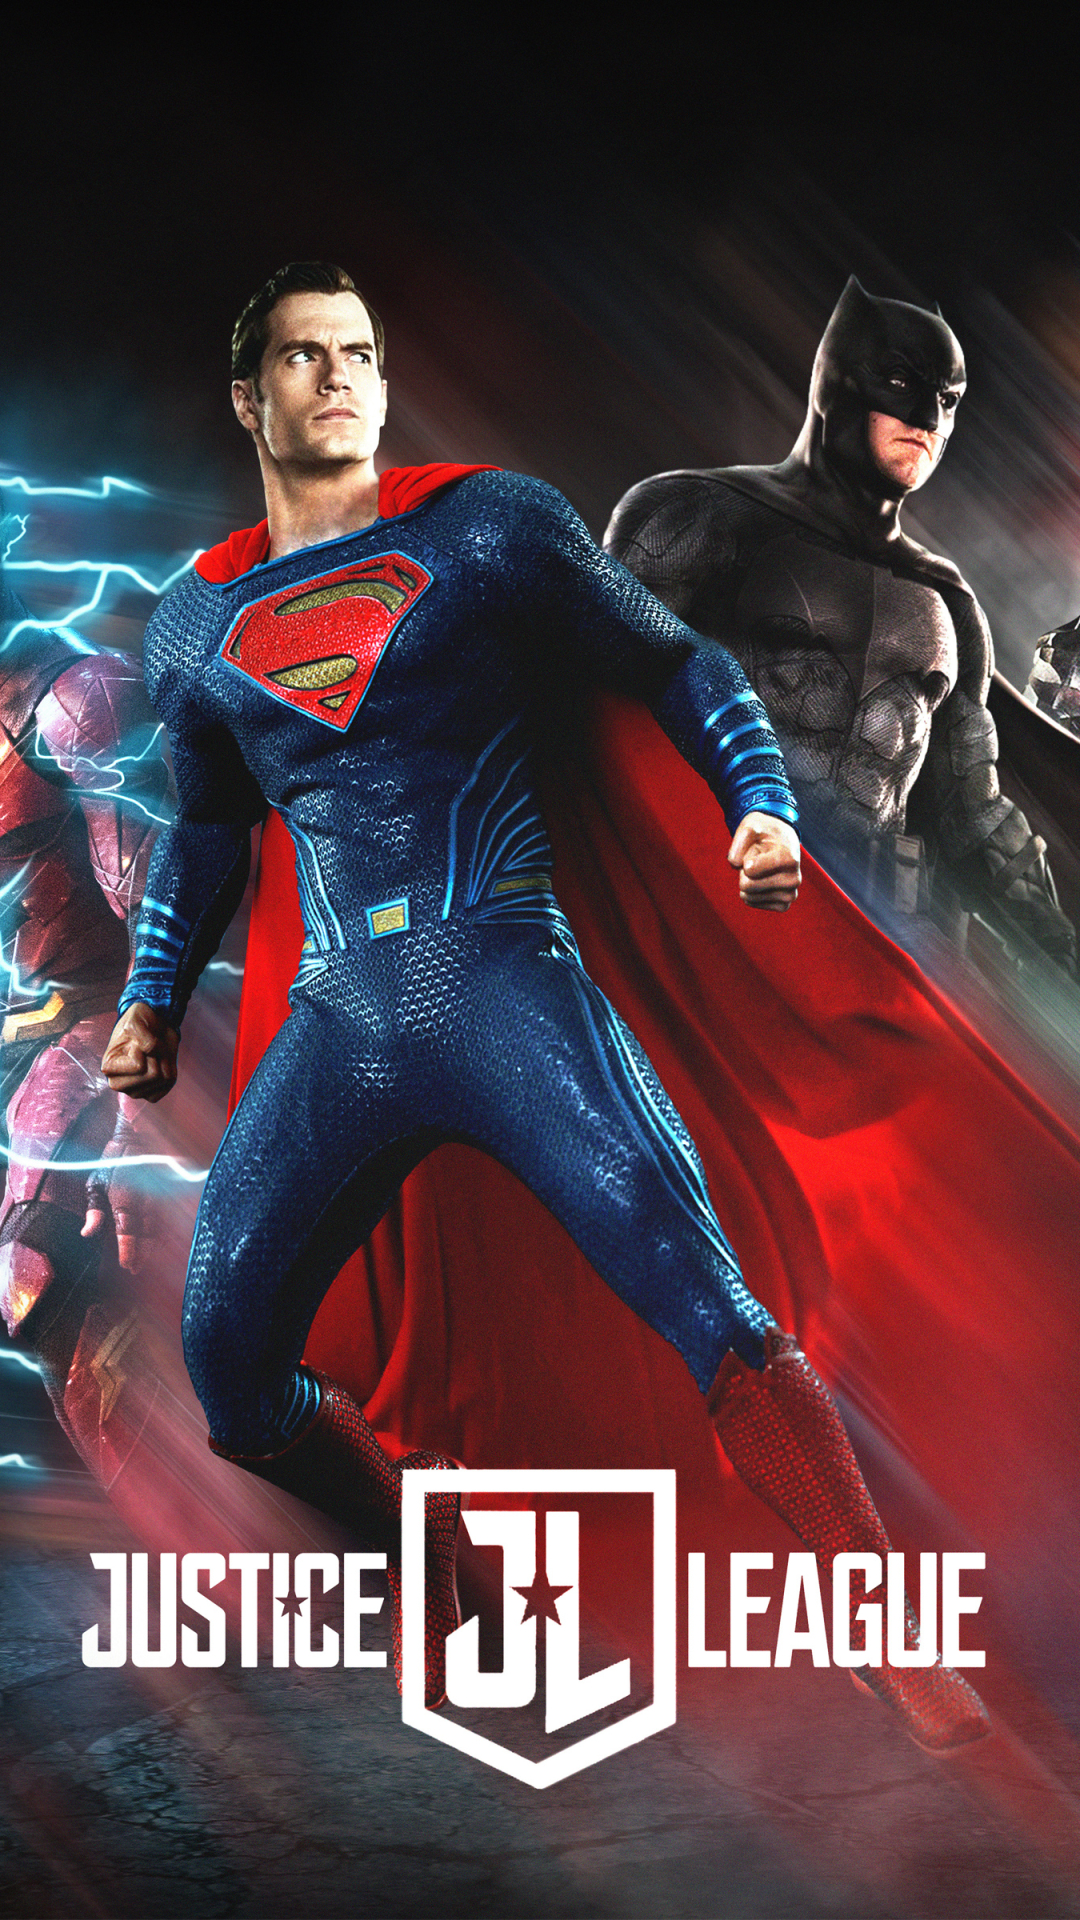 Скачать картинку Кино, Бэтмен, Супермен, Лига Справедливости, Генри Кавилл, Бен Аффлек, Лига Справедливости (2017) в телефон бесплатно.